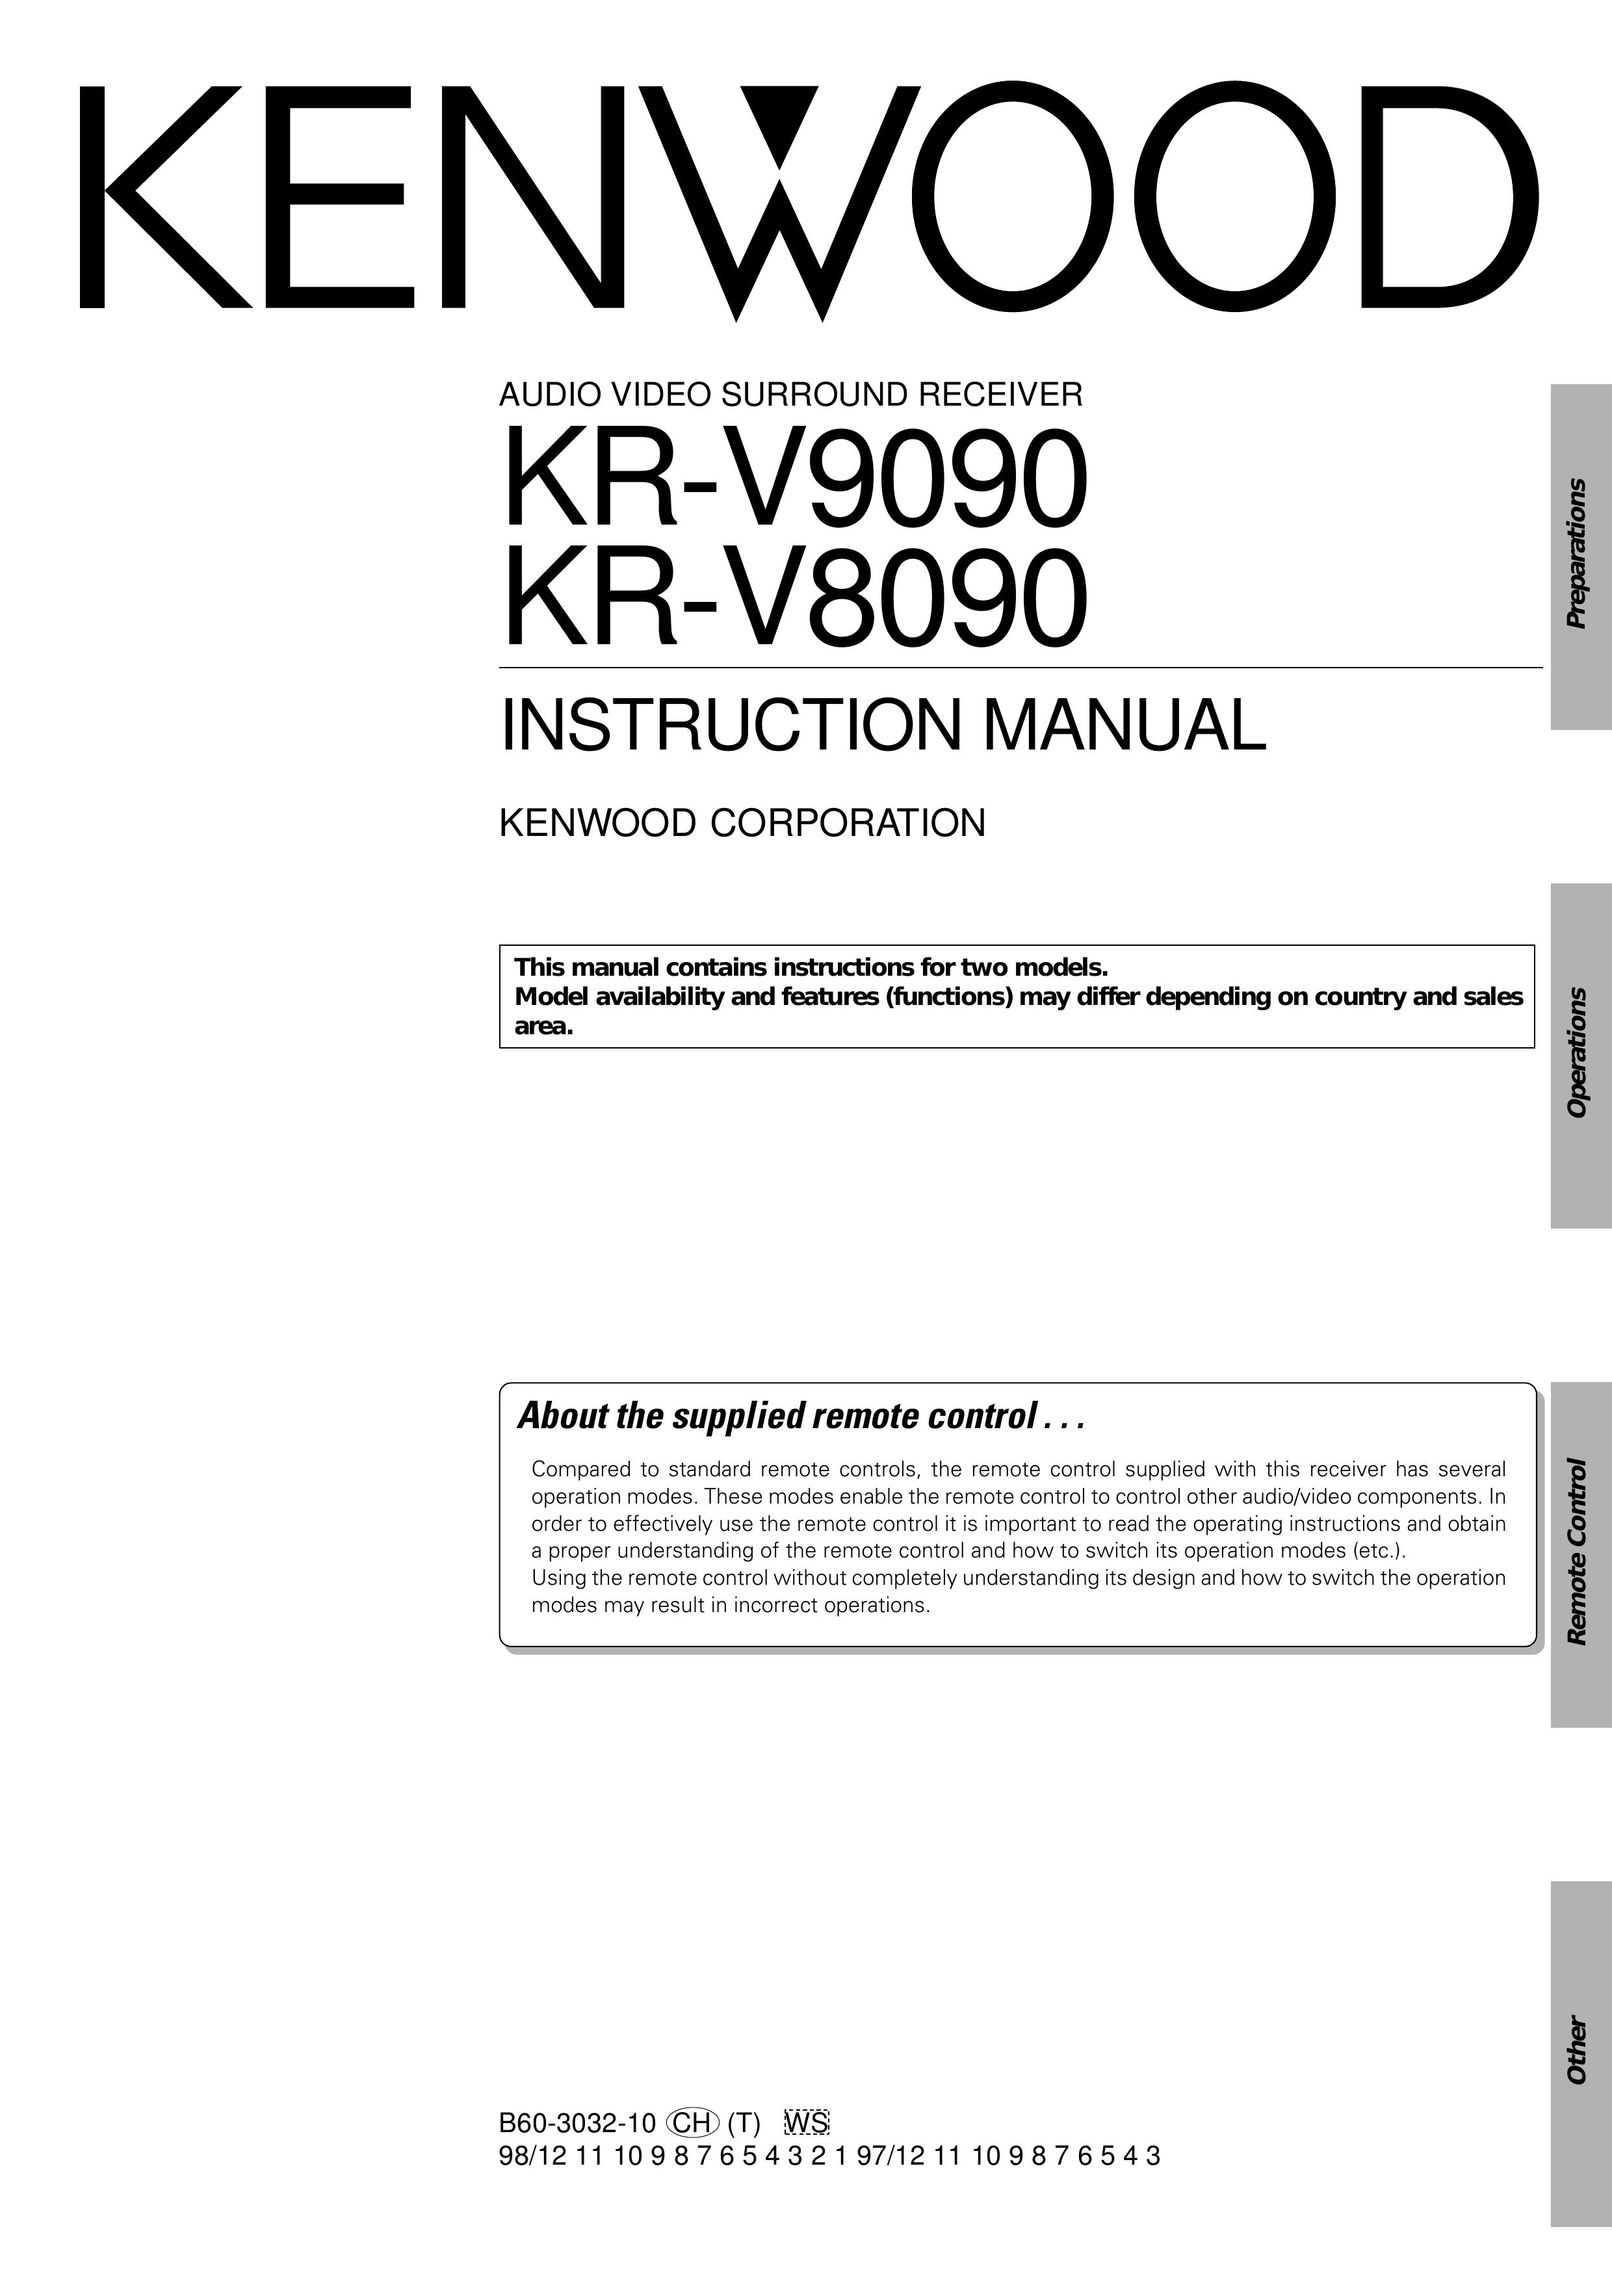 Kenwood KR-V9090 Car Satellite TV System User Manual